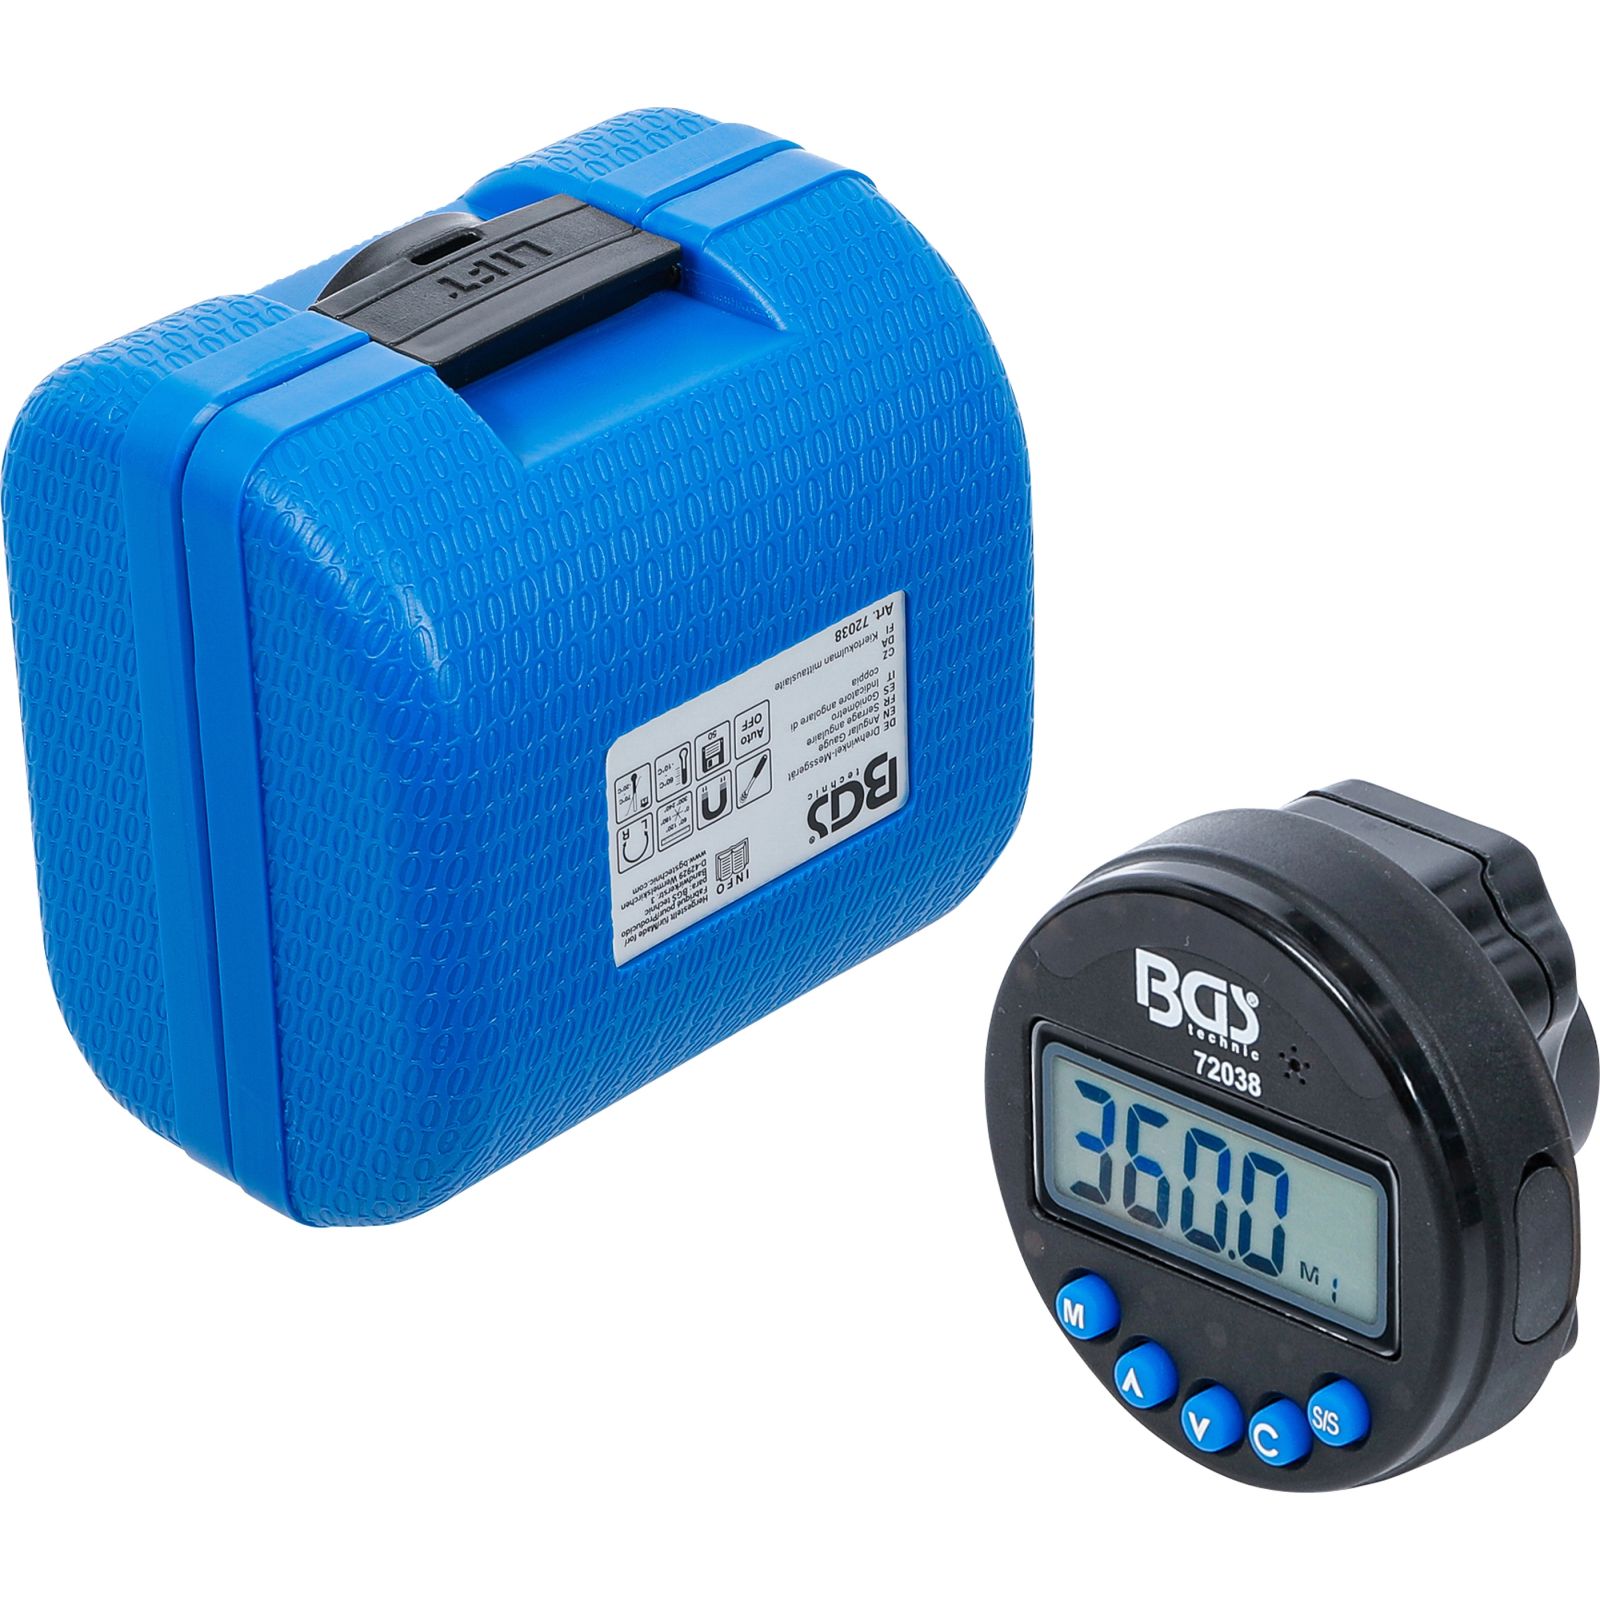 BGS Drehwinkel-Messgerät, digital, mit Magnet